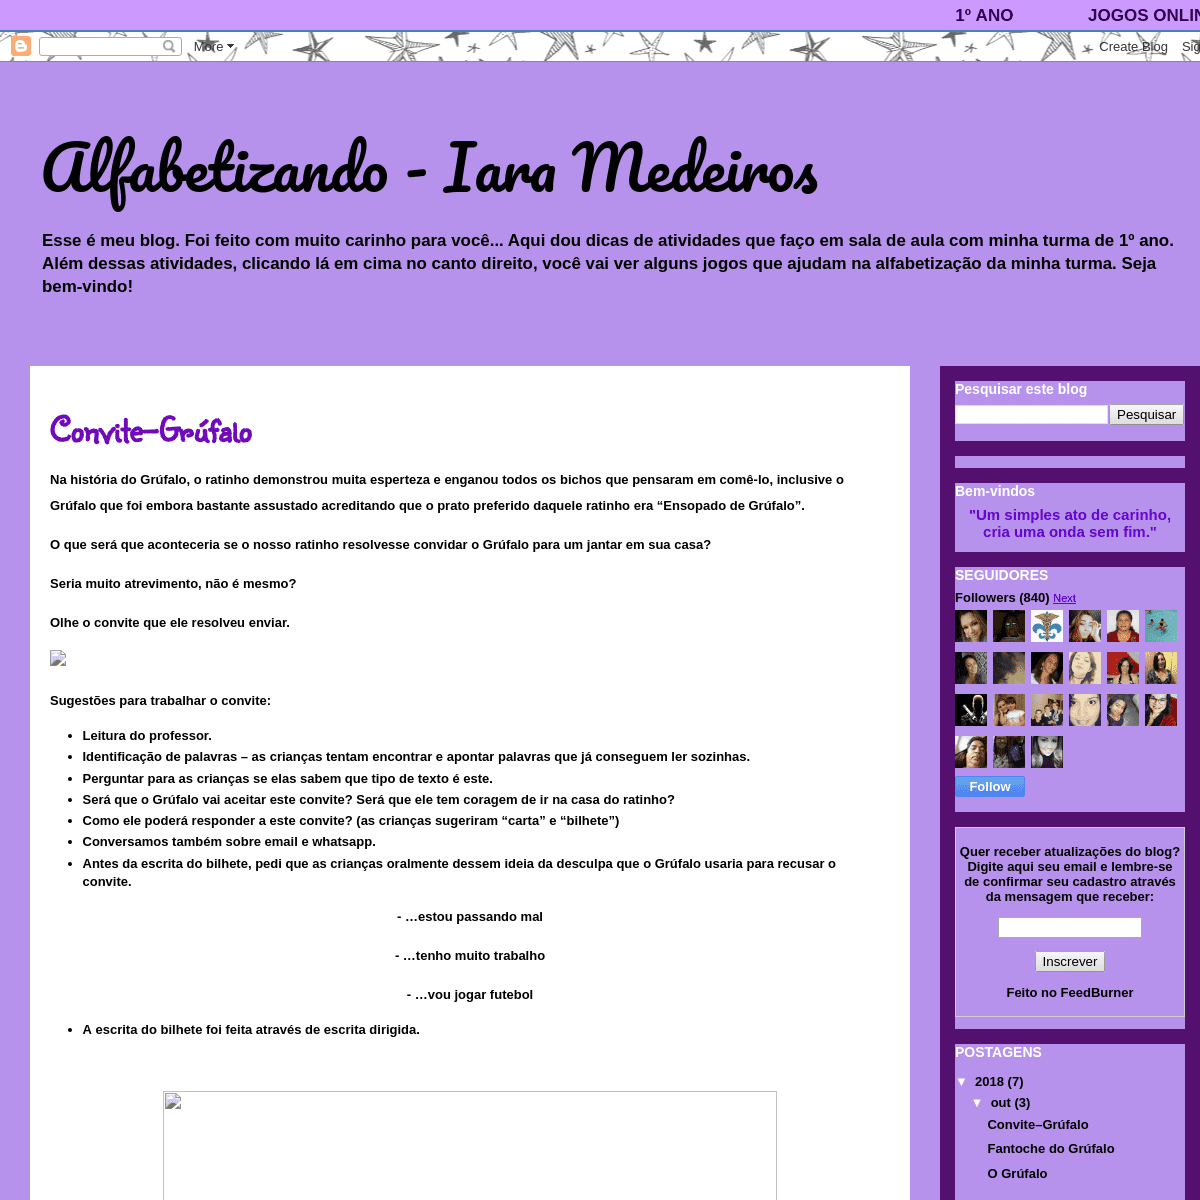 A complete backup of matosmedeiros.blogspot.com - Archived 2023-12-02